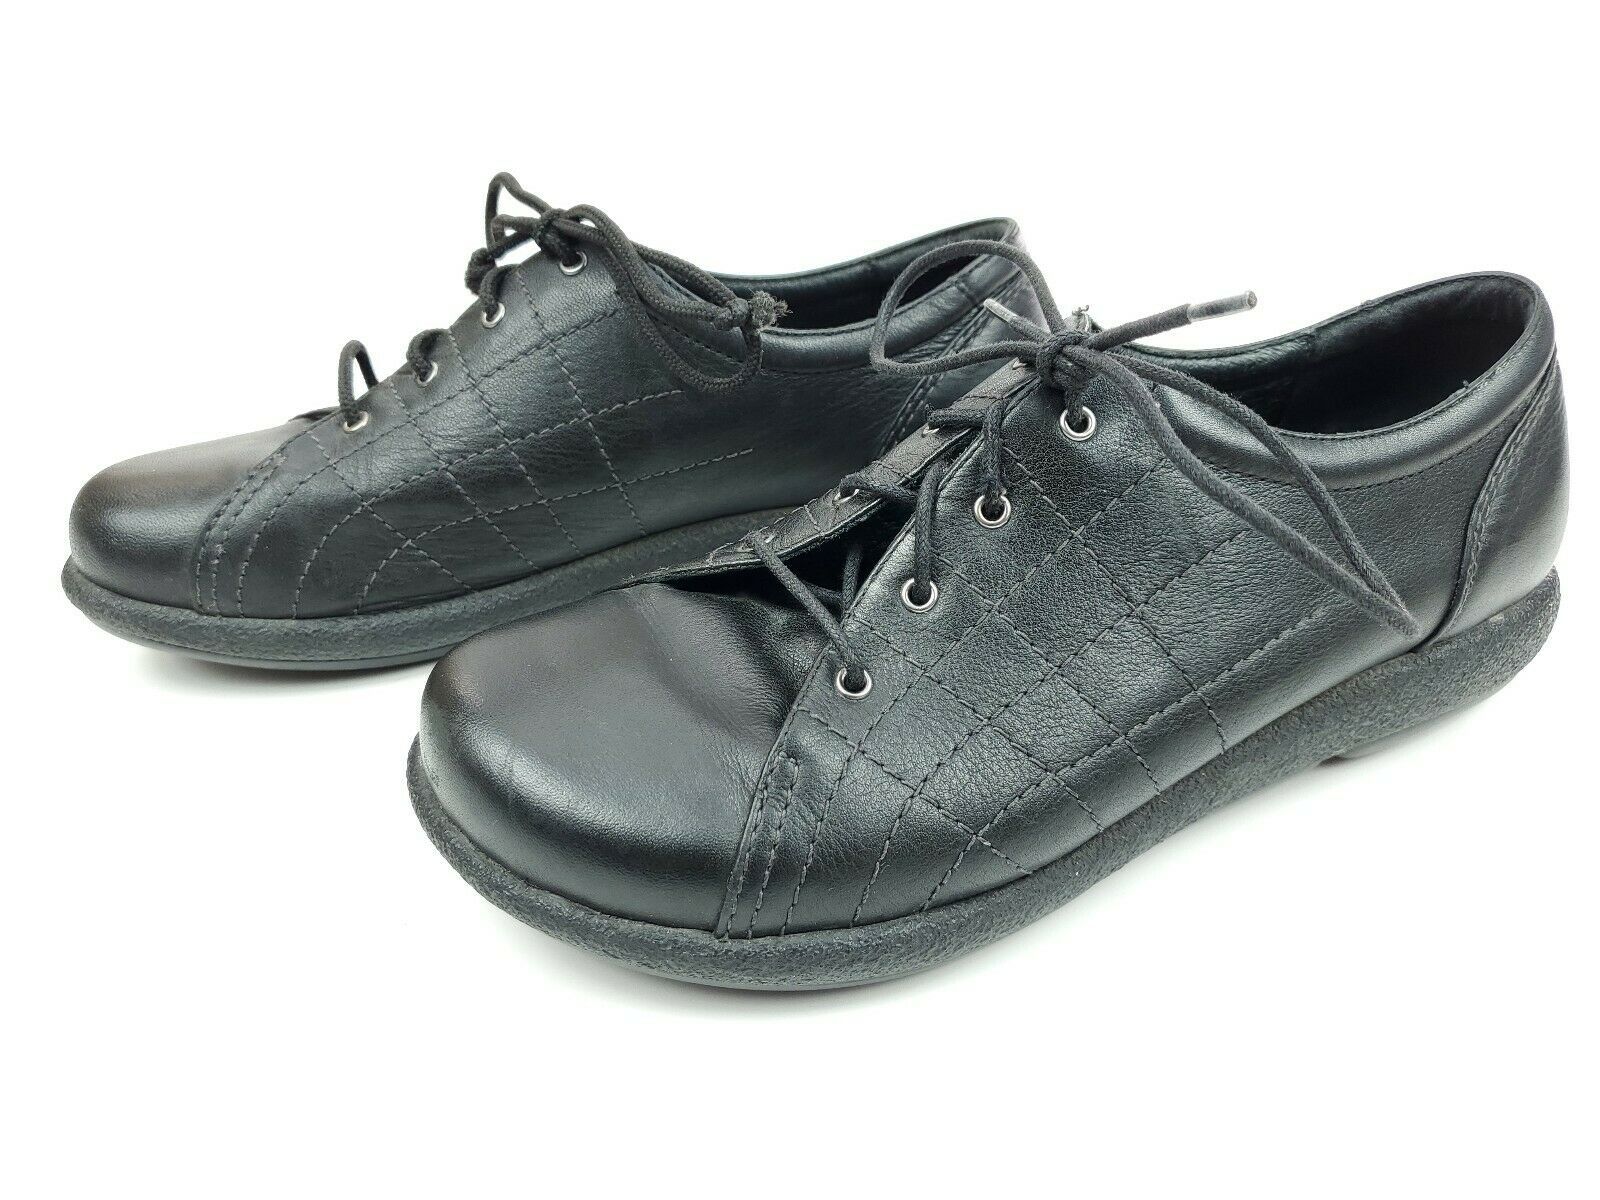 New Dansko Shoes Athletic Walking Oxford Helen Black/White Medium M, B 